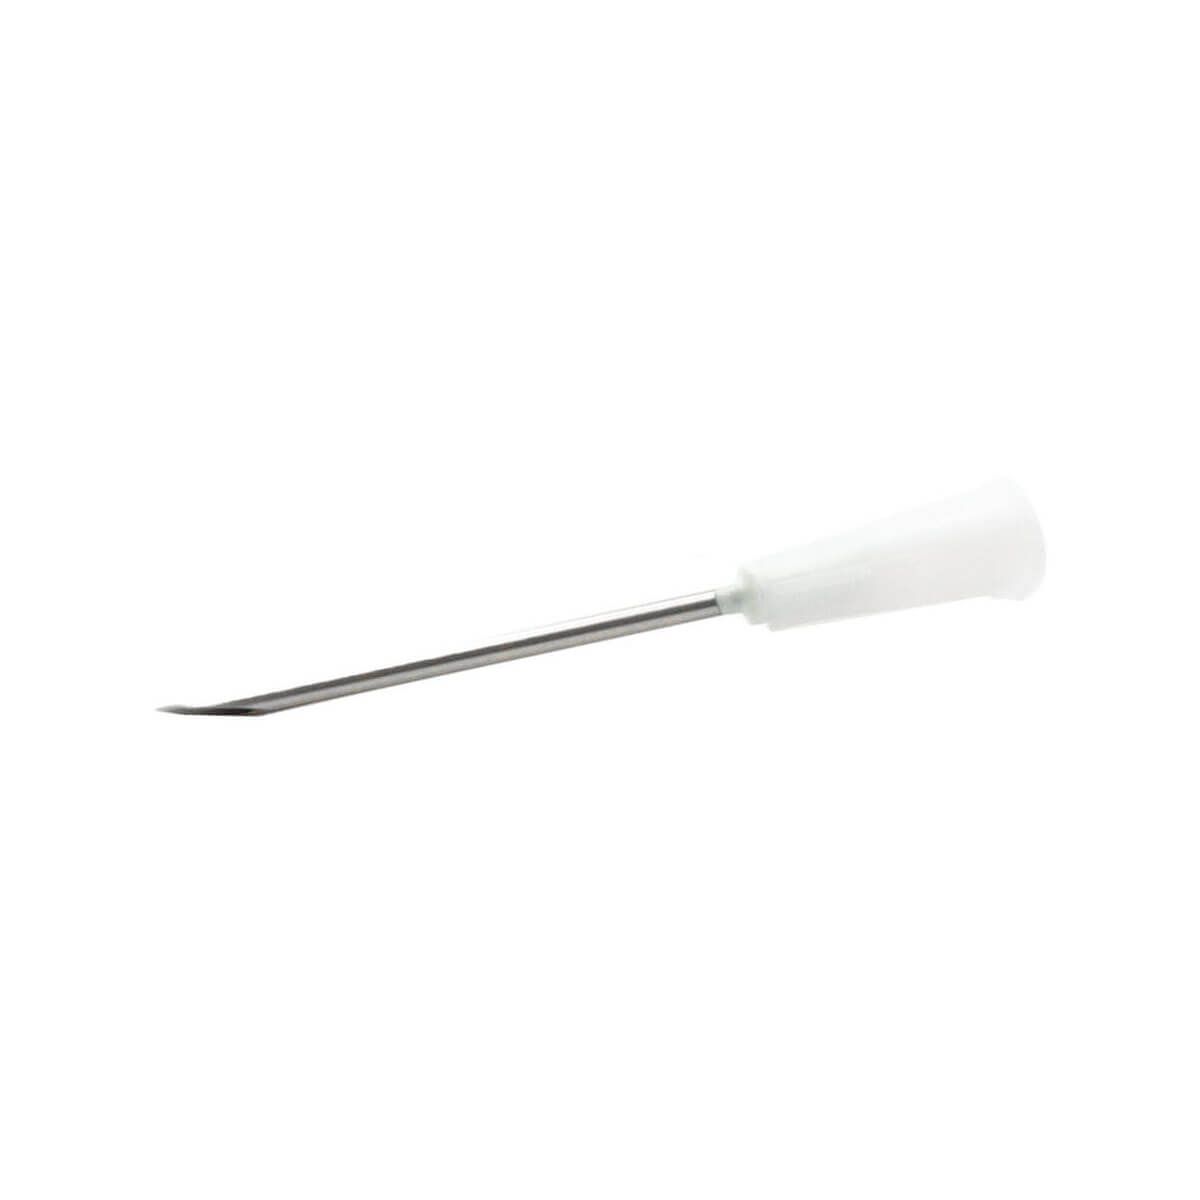 BD Microlance Needle White 16G 40MM